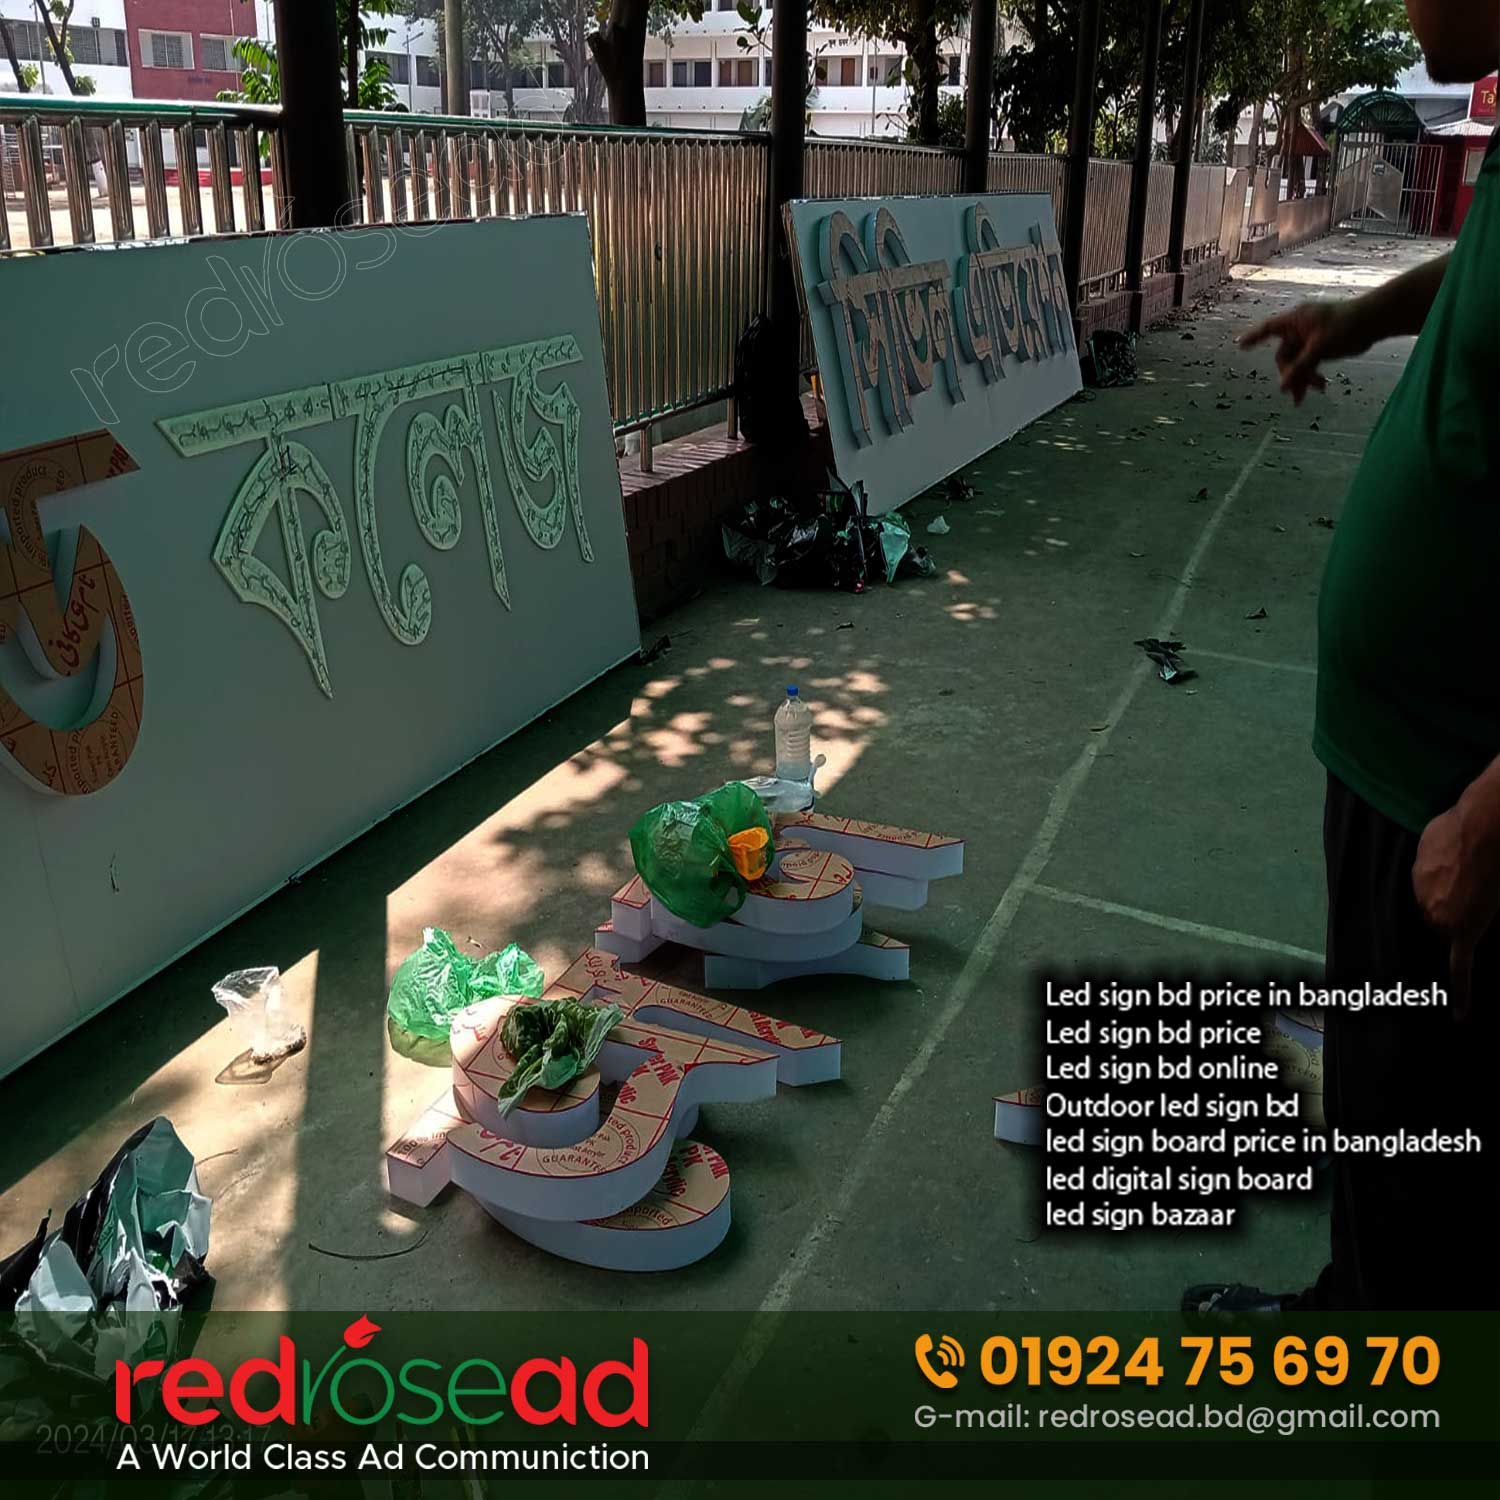 Best Led Acrylic Letter Signage Company in Bangladesh